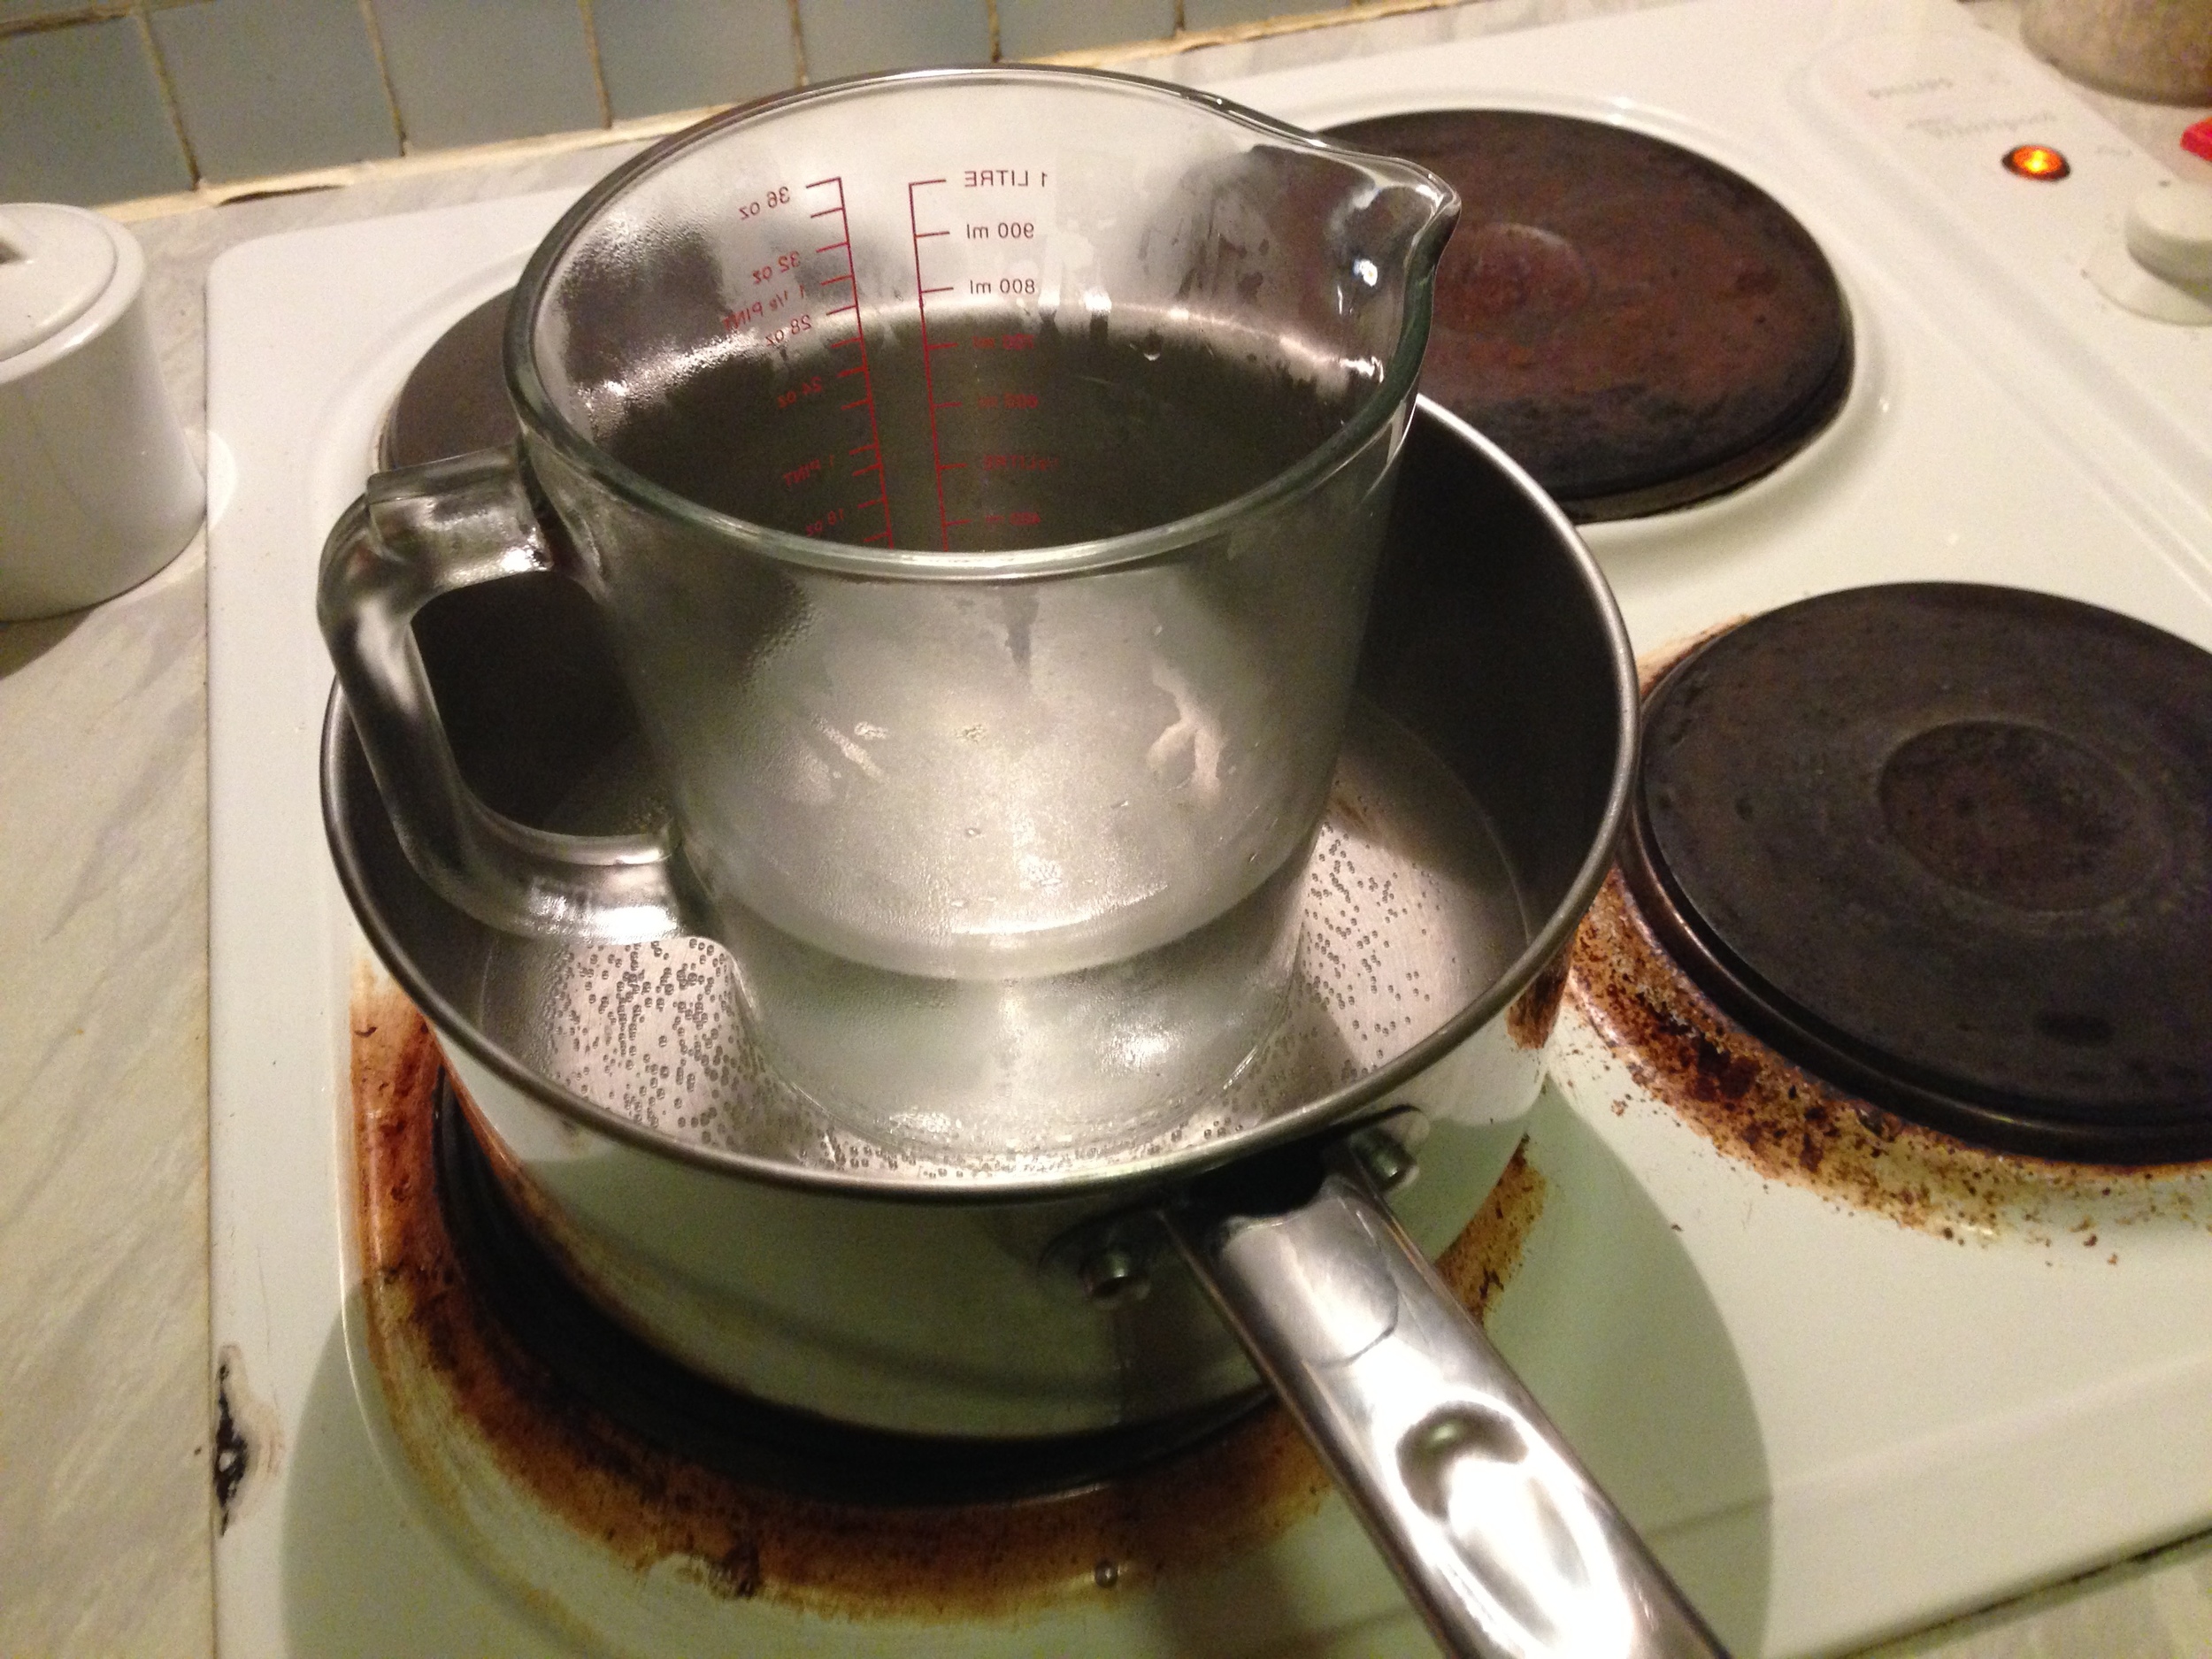 Heating the Pan